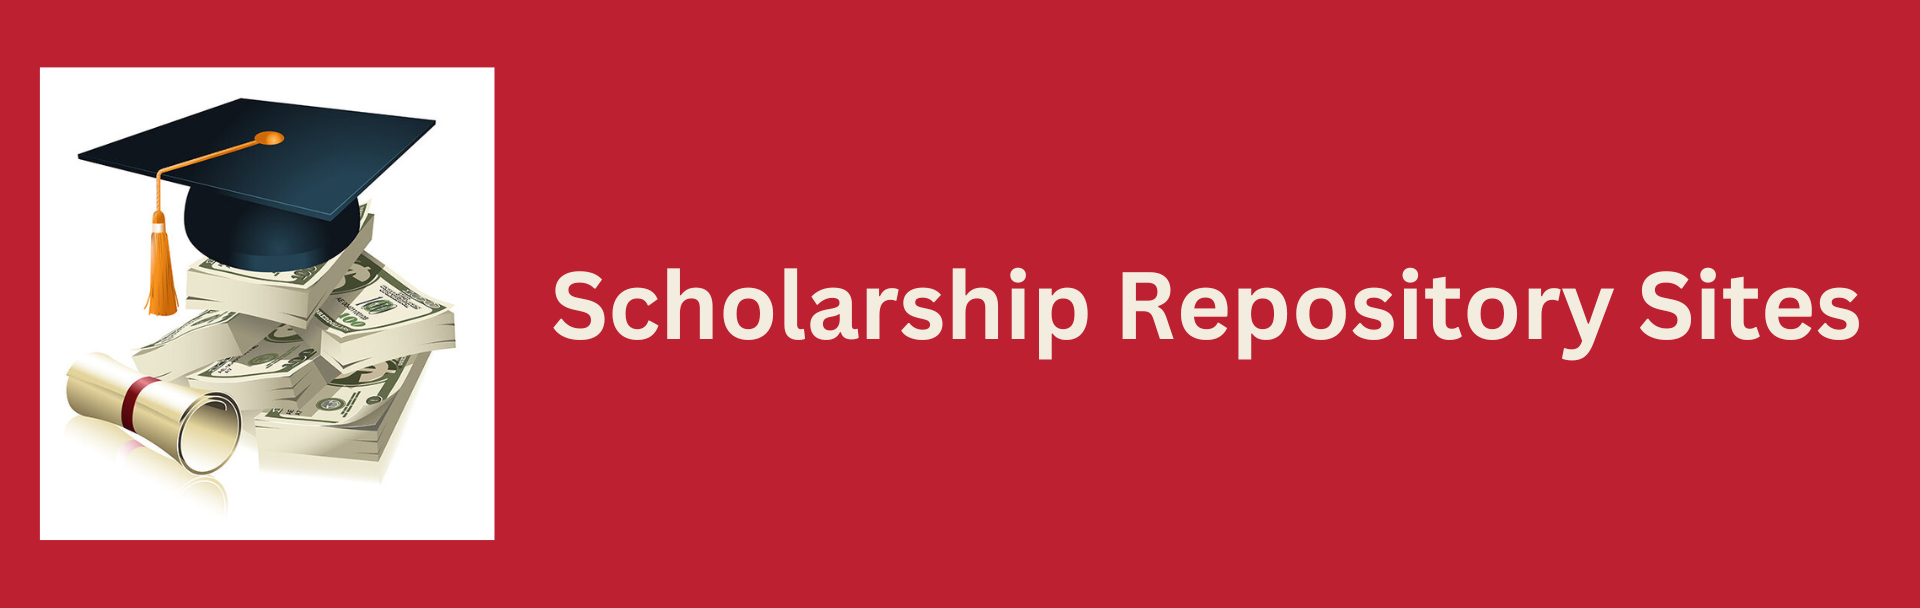 Scholarship Repository Sites